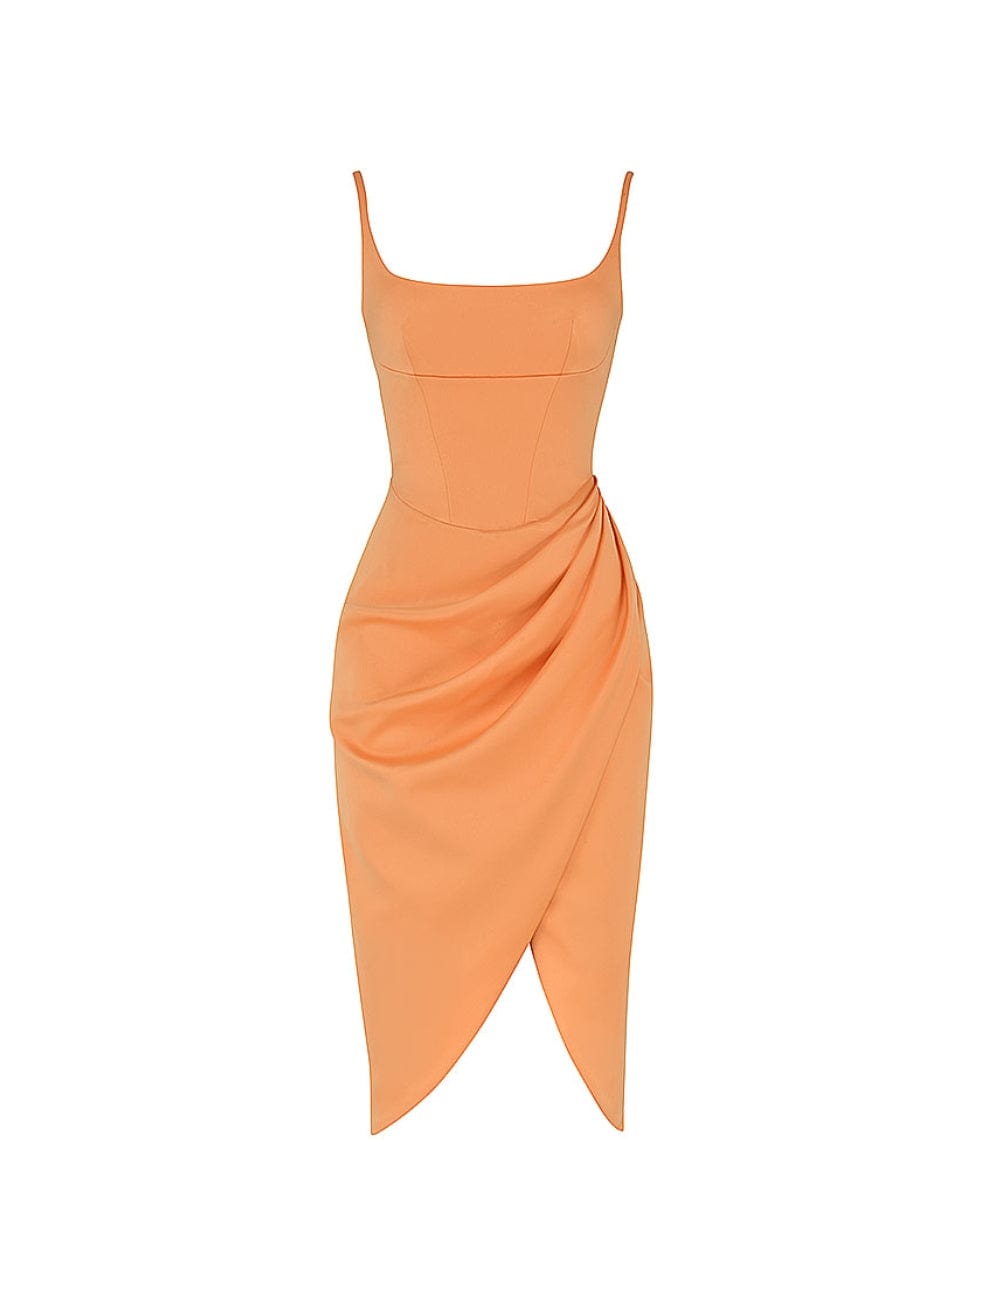 Bianca Dress in Tangerine